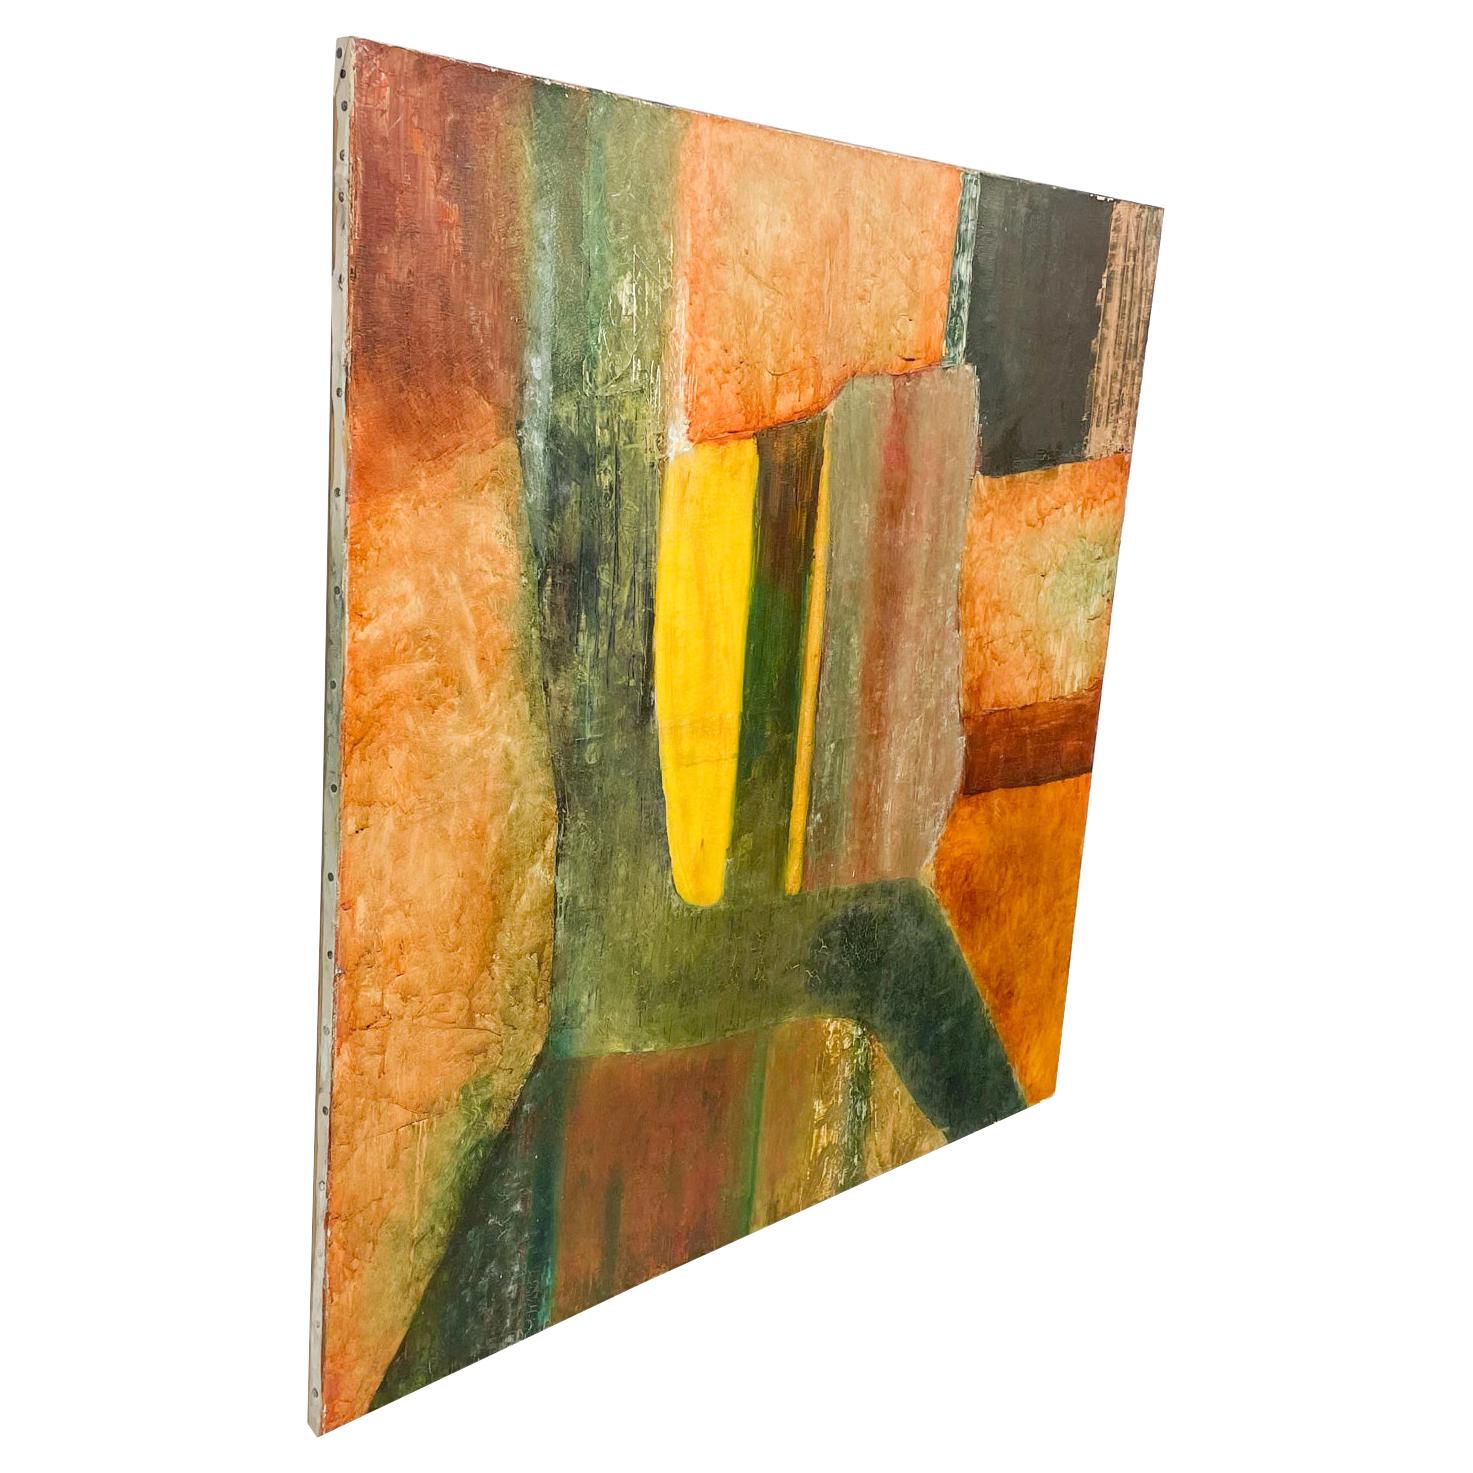 Vivid Orange Abstract Cubist Oil on Canvas Painting Signed C Martin Tschaen 88